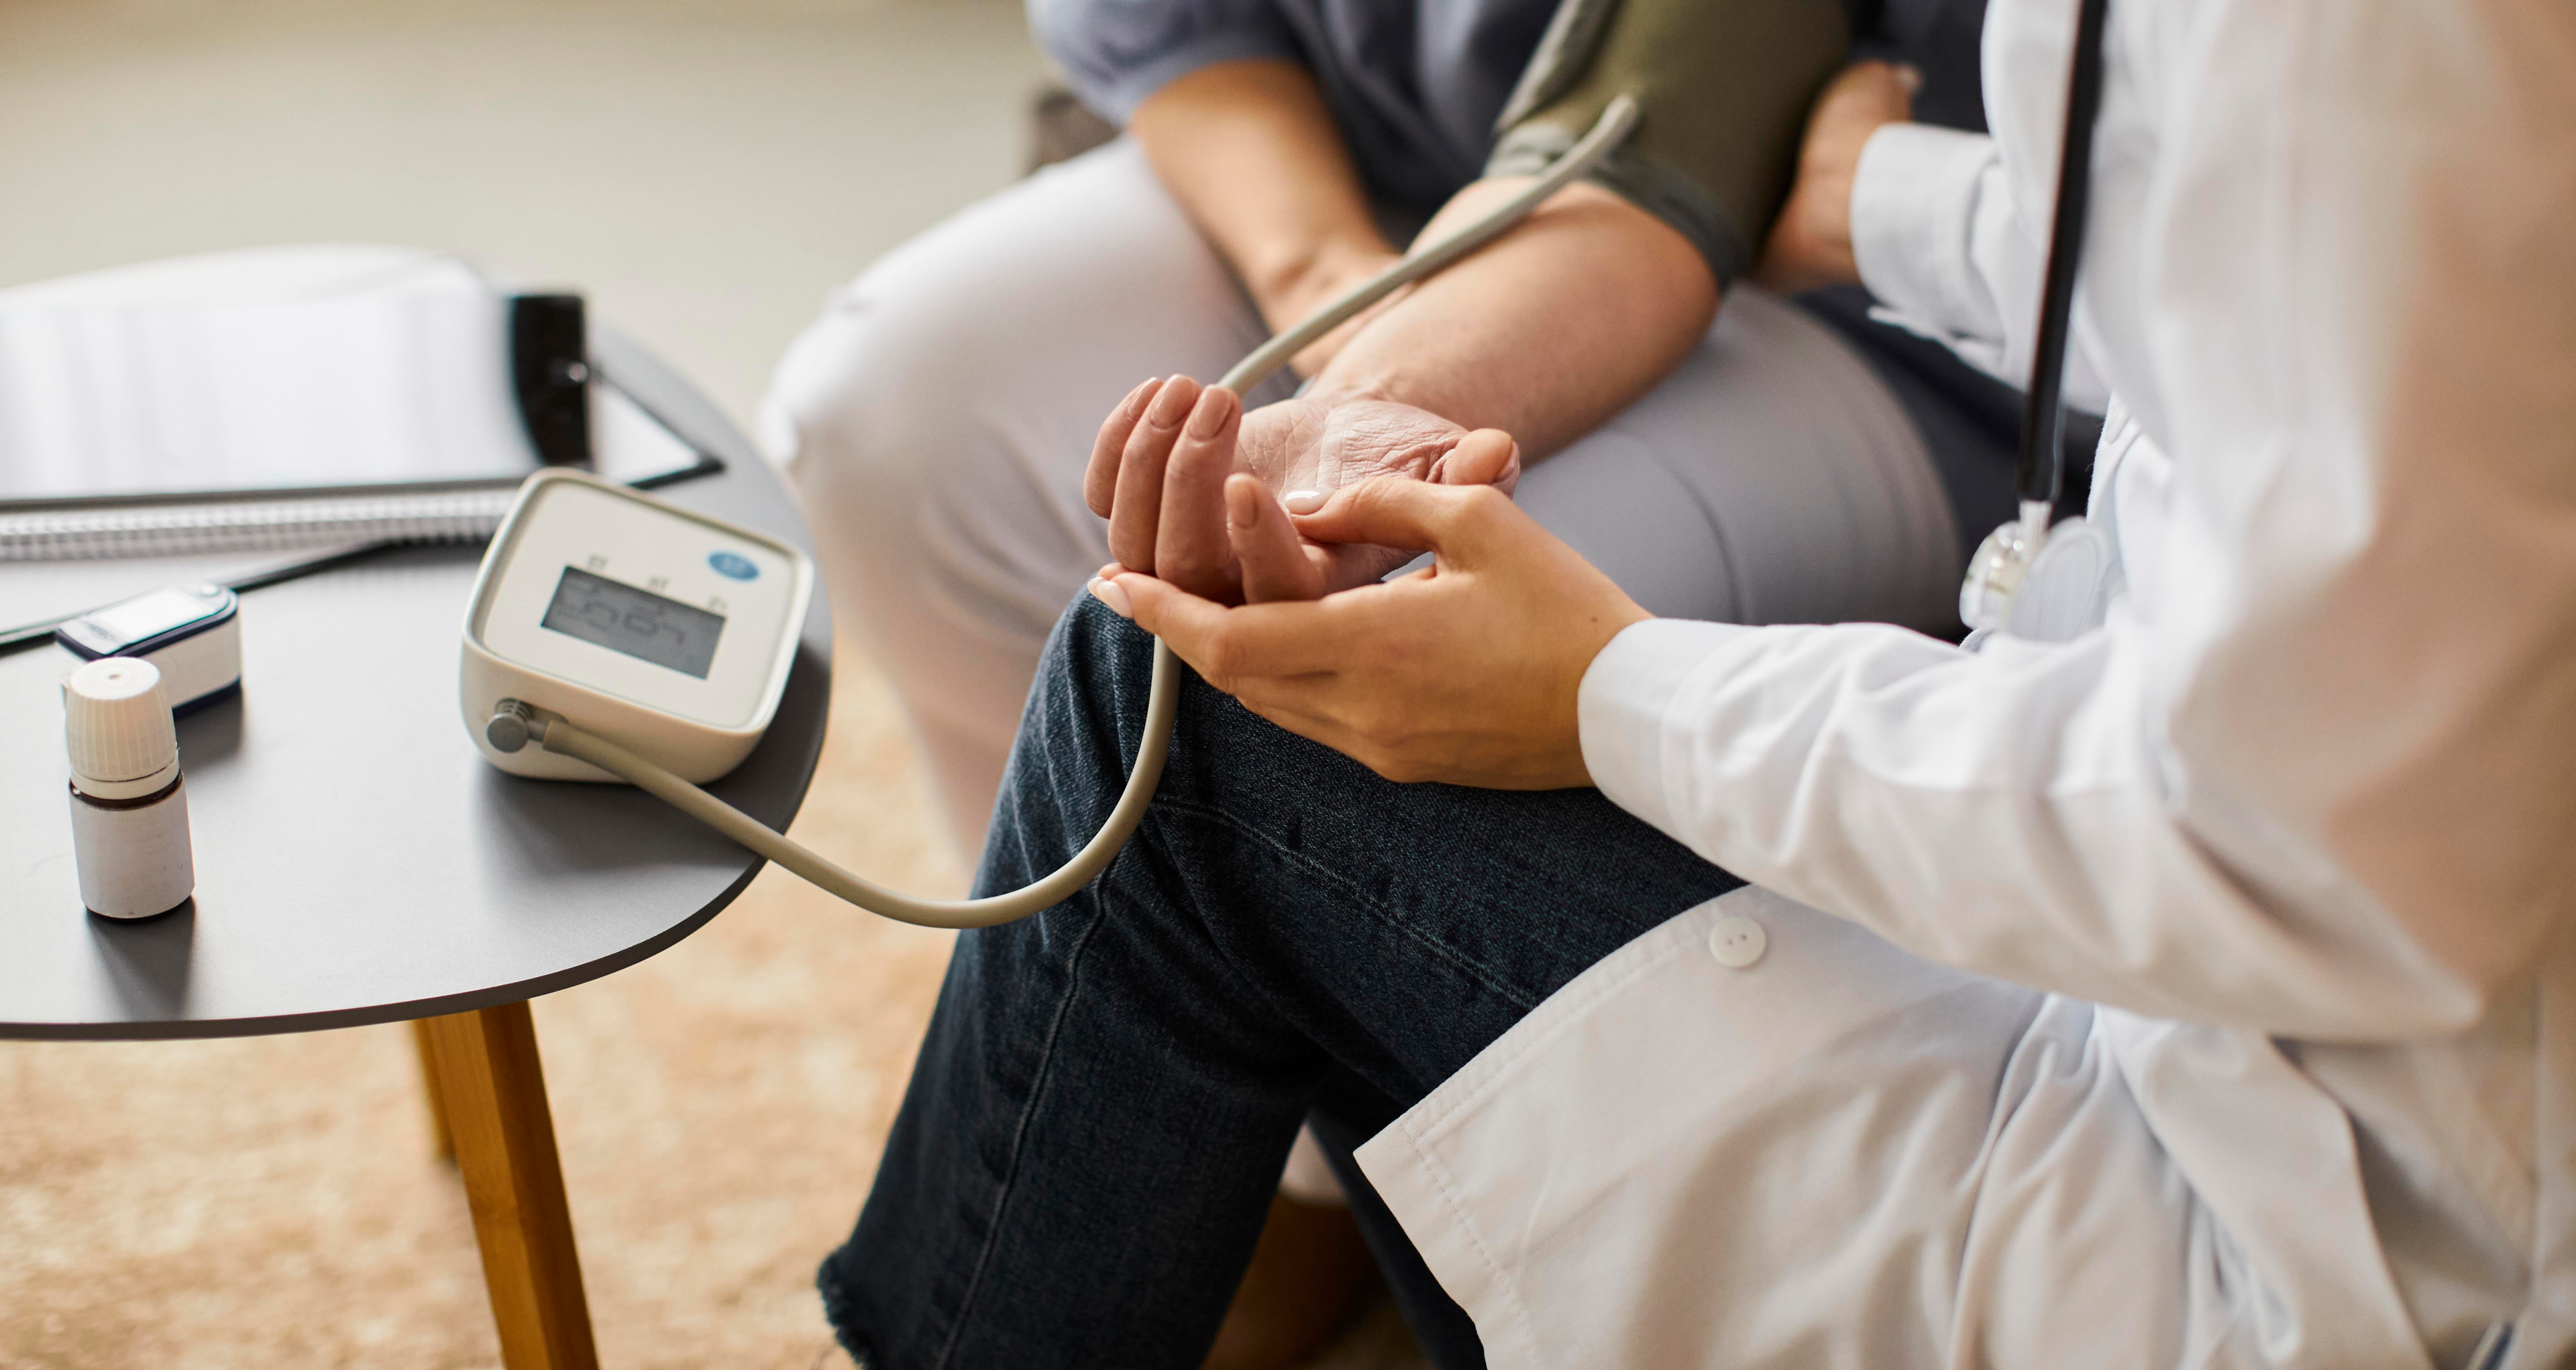 Blood pressure measurement is an essential part of regular health monitoring.